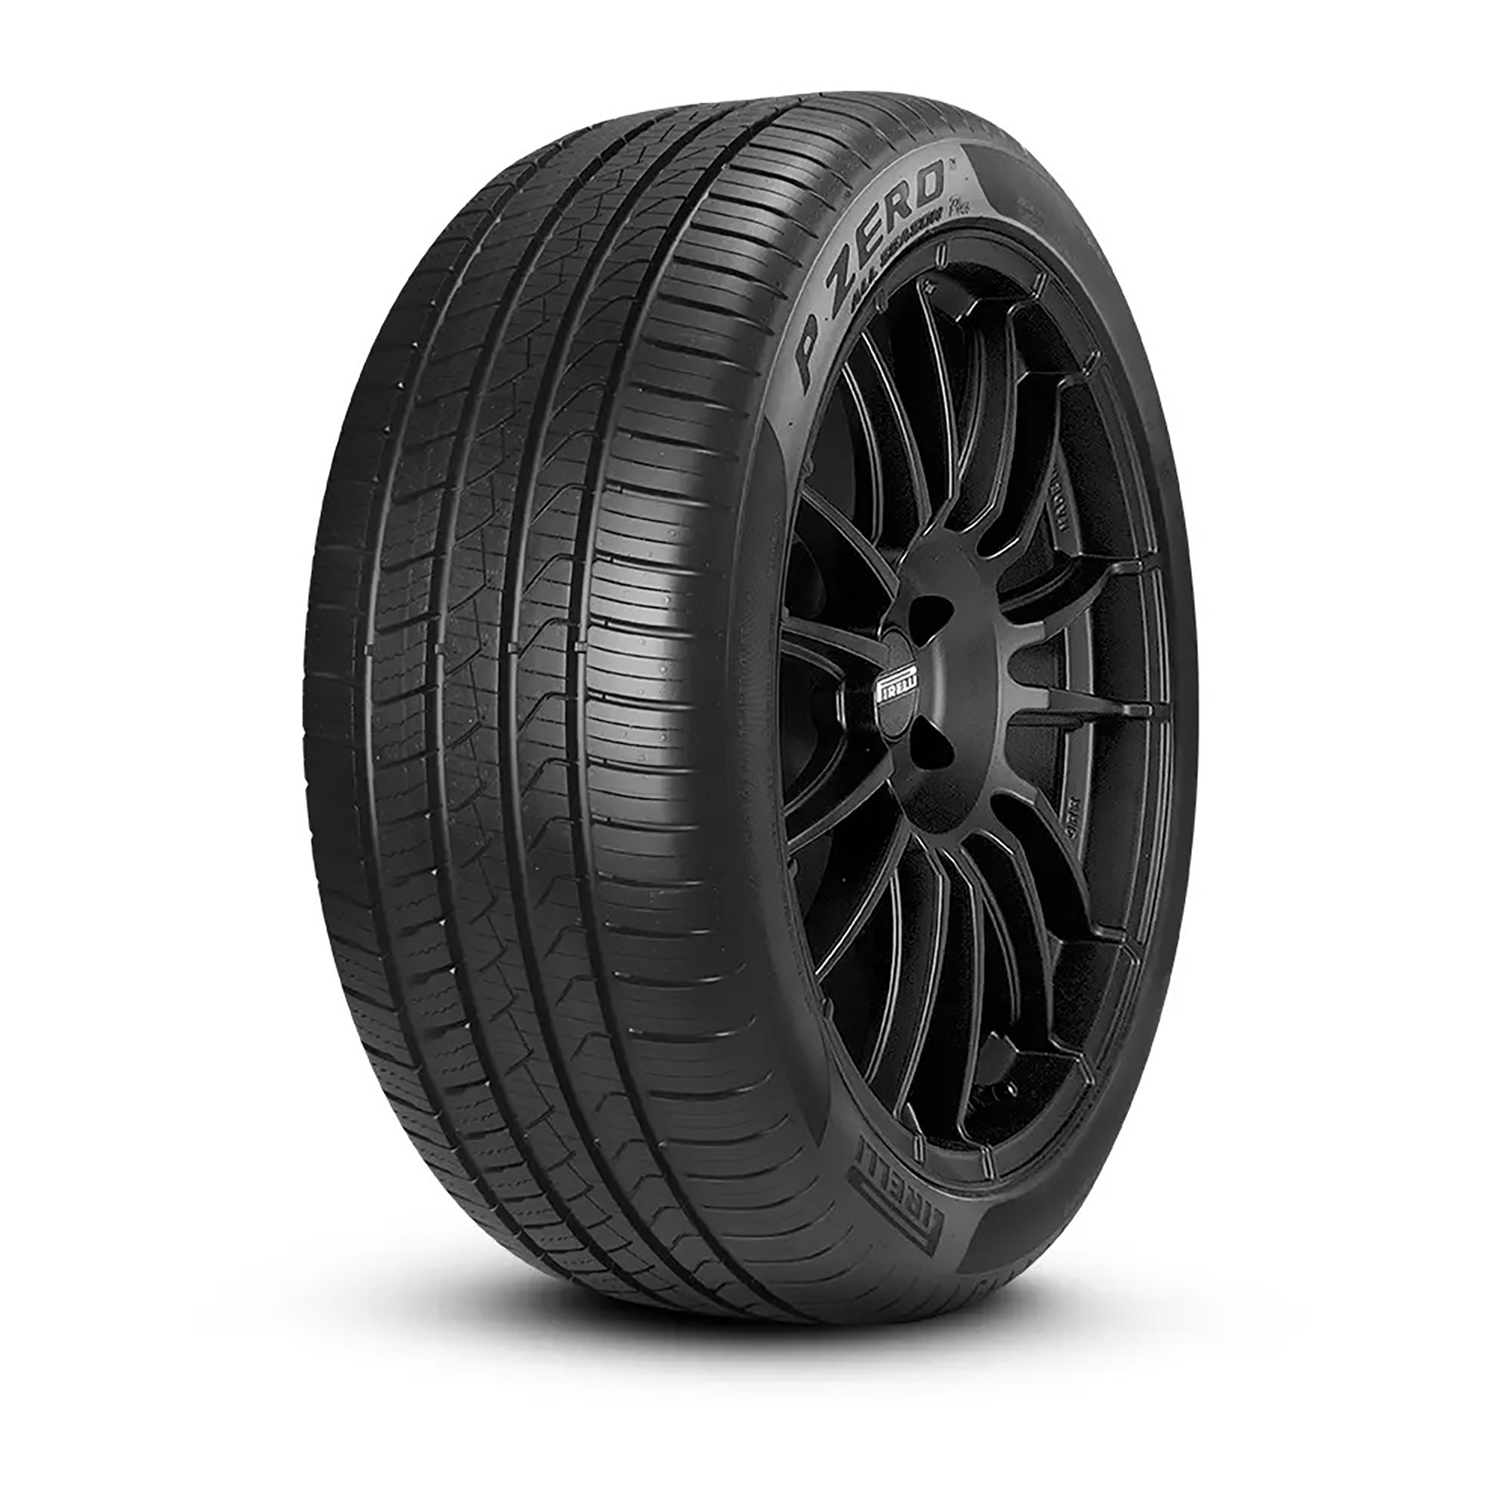 Pirelli P Zero All Season Plus UHP All Season 245/45R18 100Y XL Passenger Tire - image 5 of 7